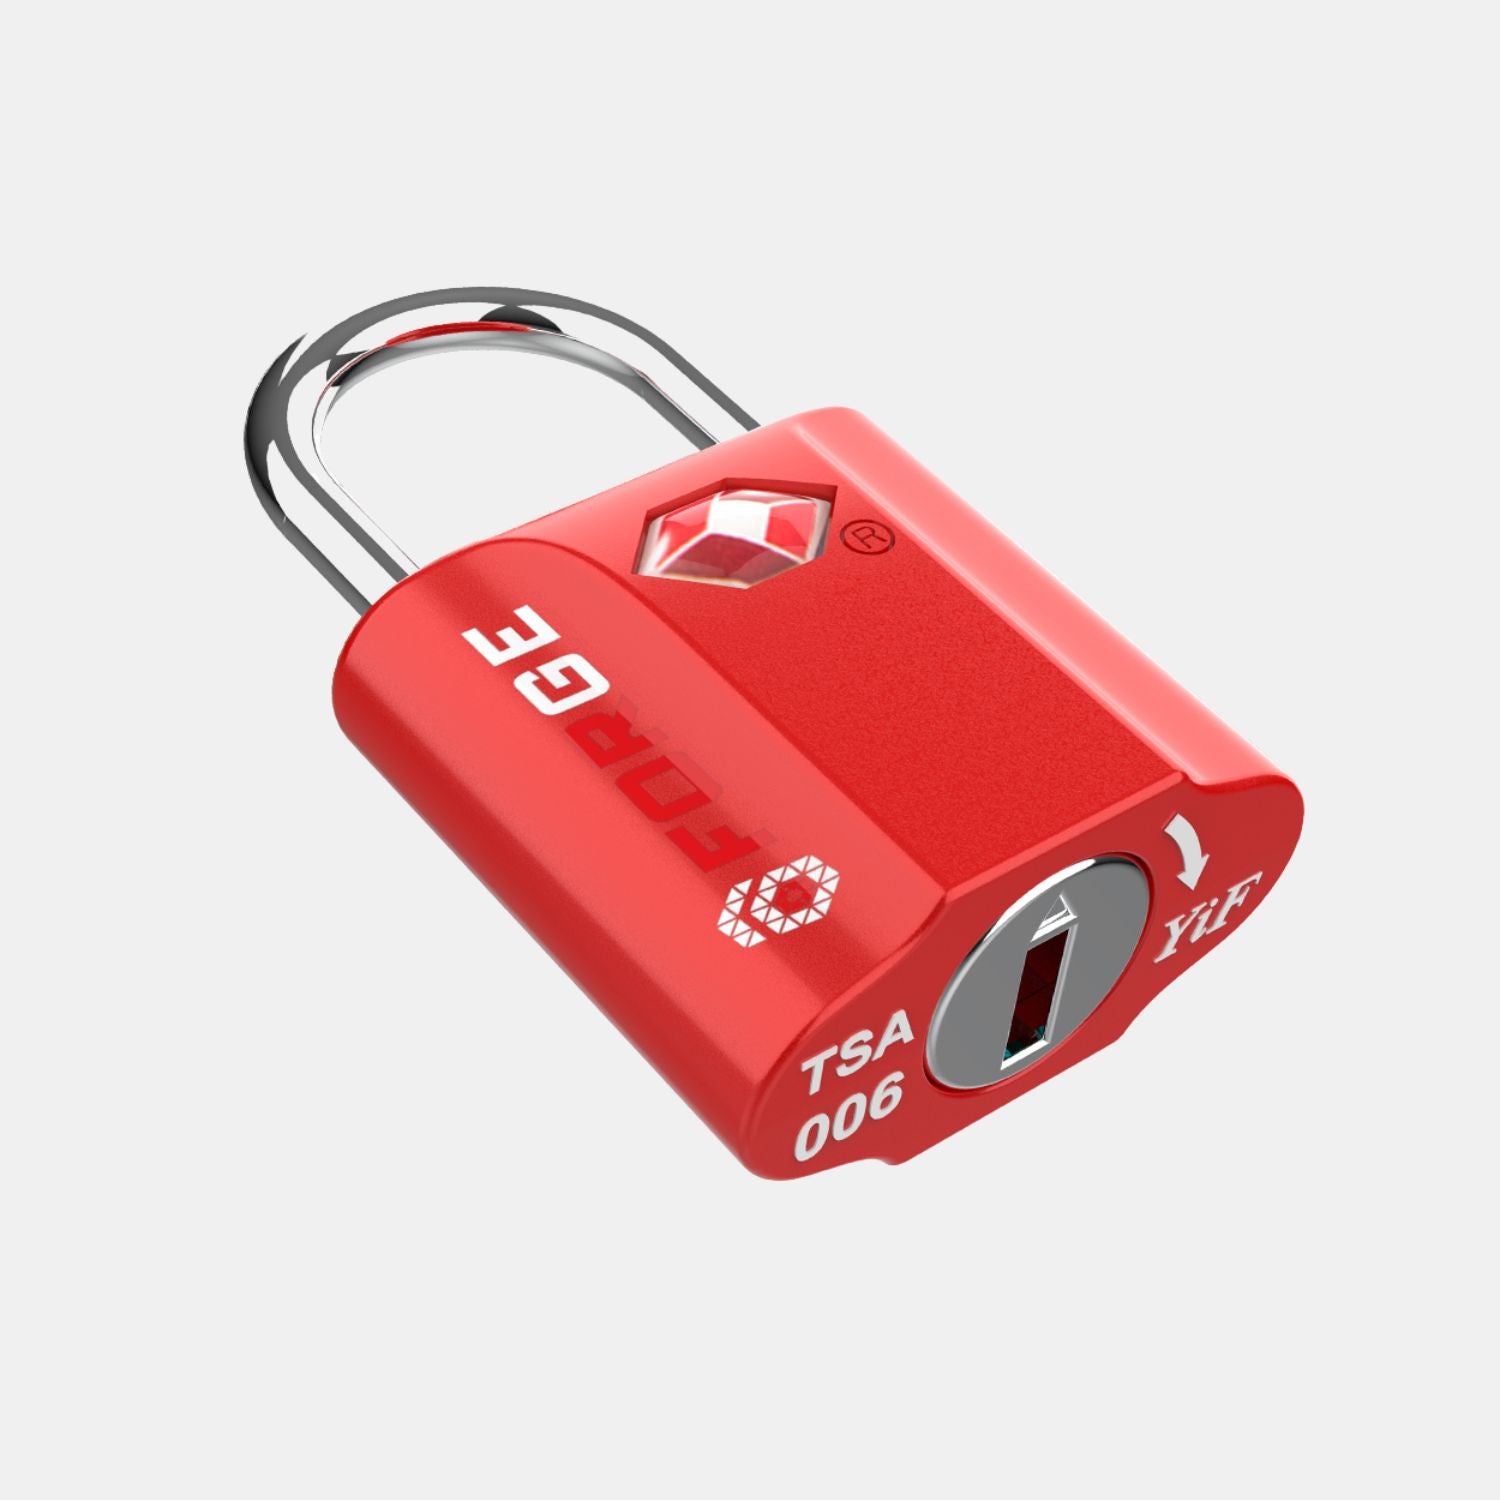 TSA Approved Dimple Key Luggage Lock - TSA006 Key, Ultra-Secure Small Size Lock. Red 2 Locks